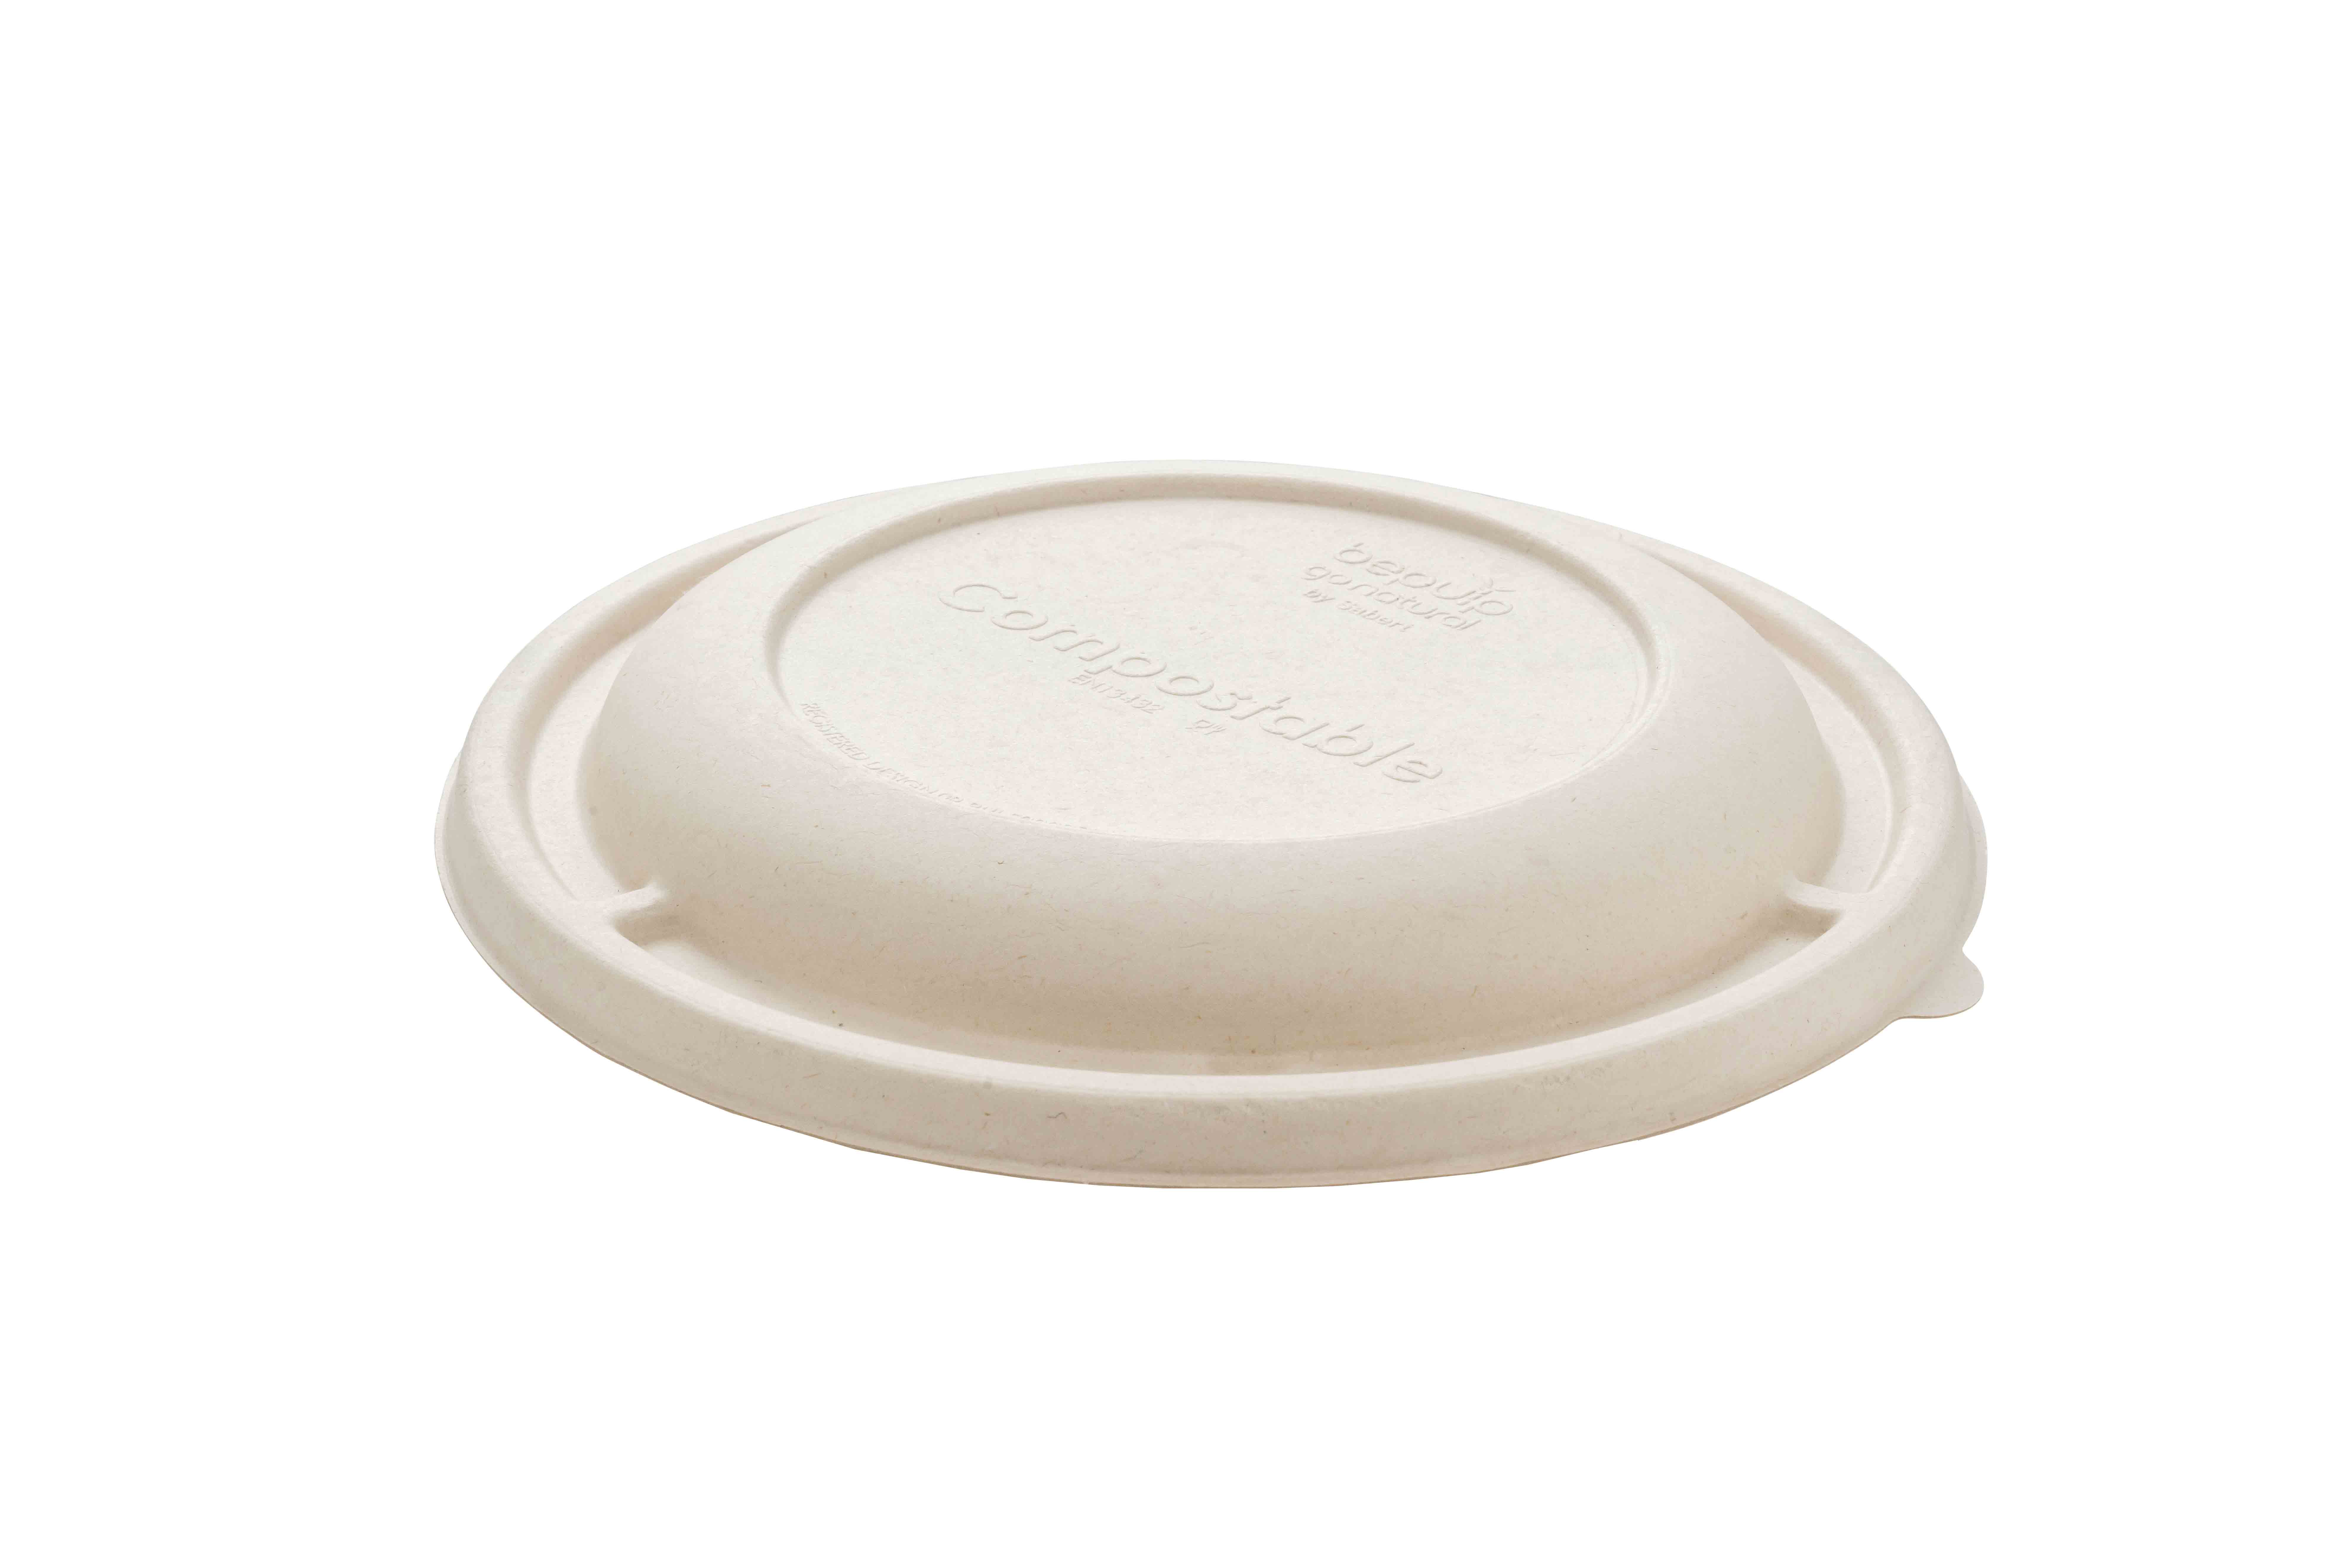 Pulp lid for pulp buddha bowls Ø 14 cm